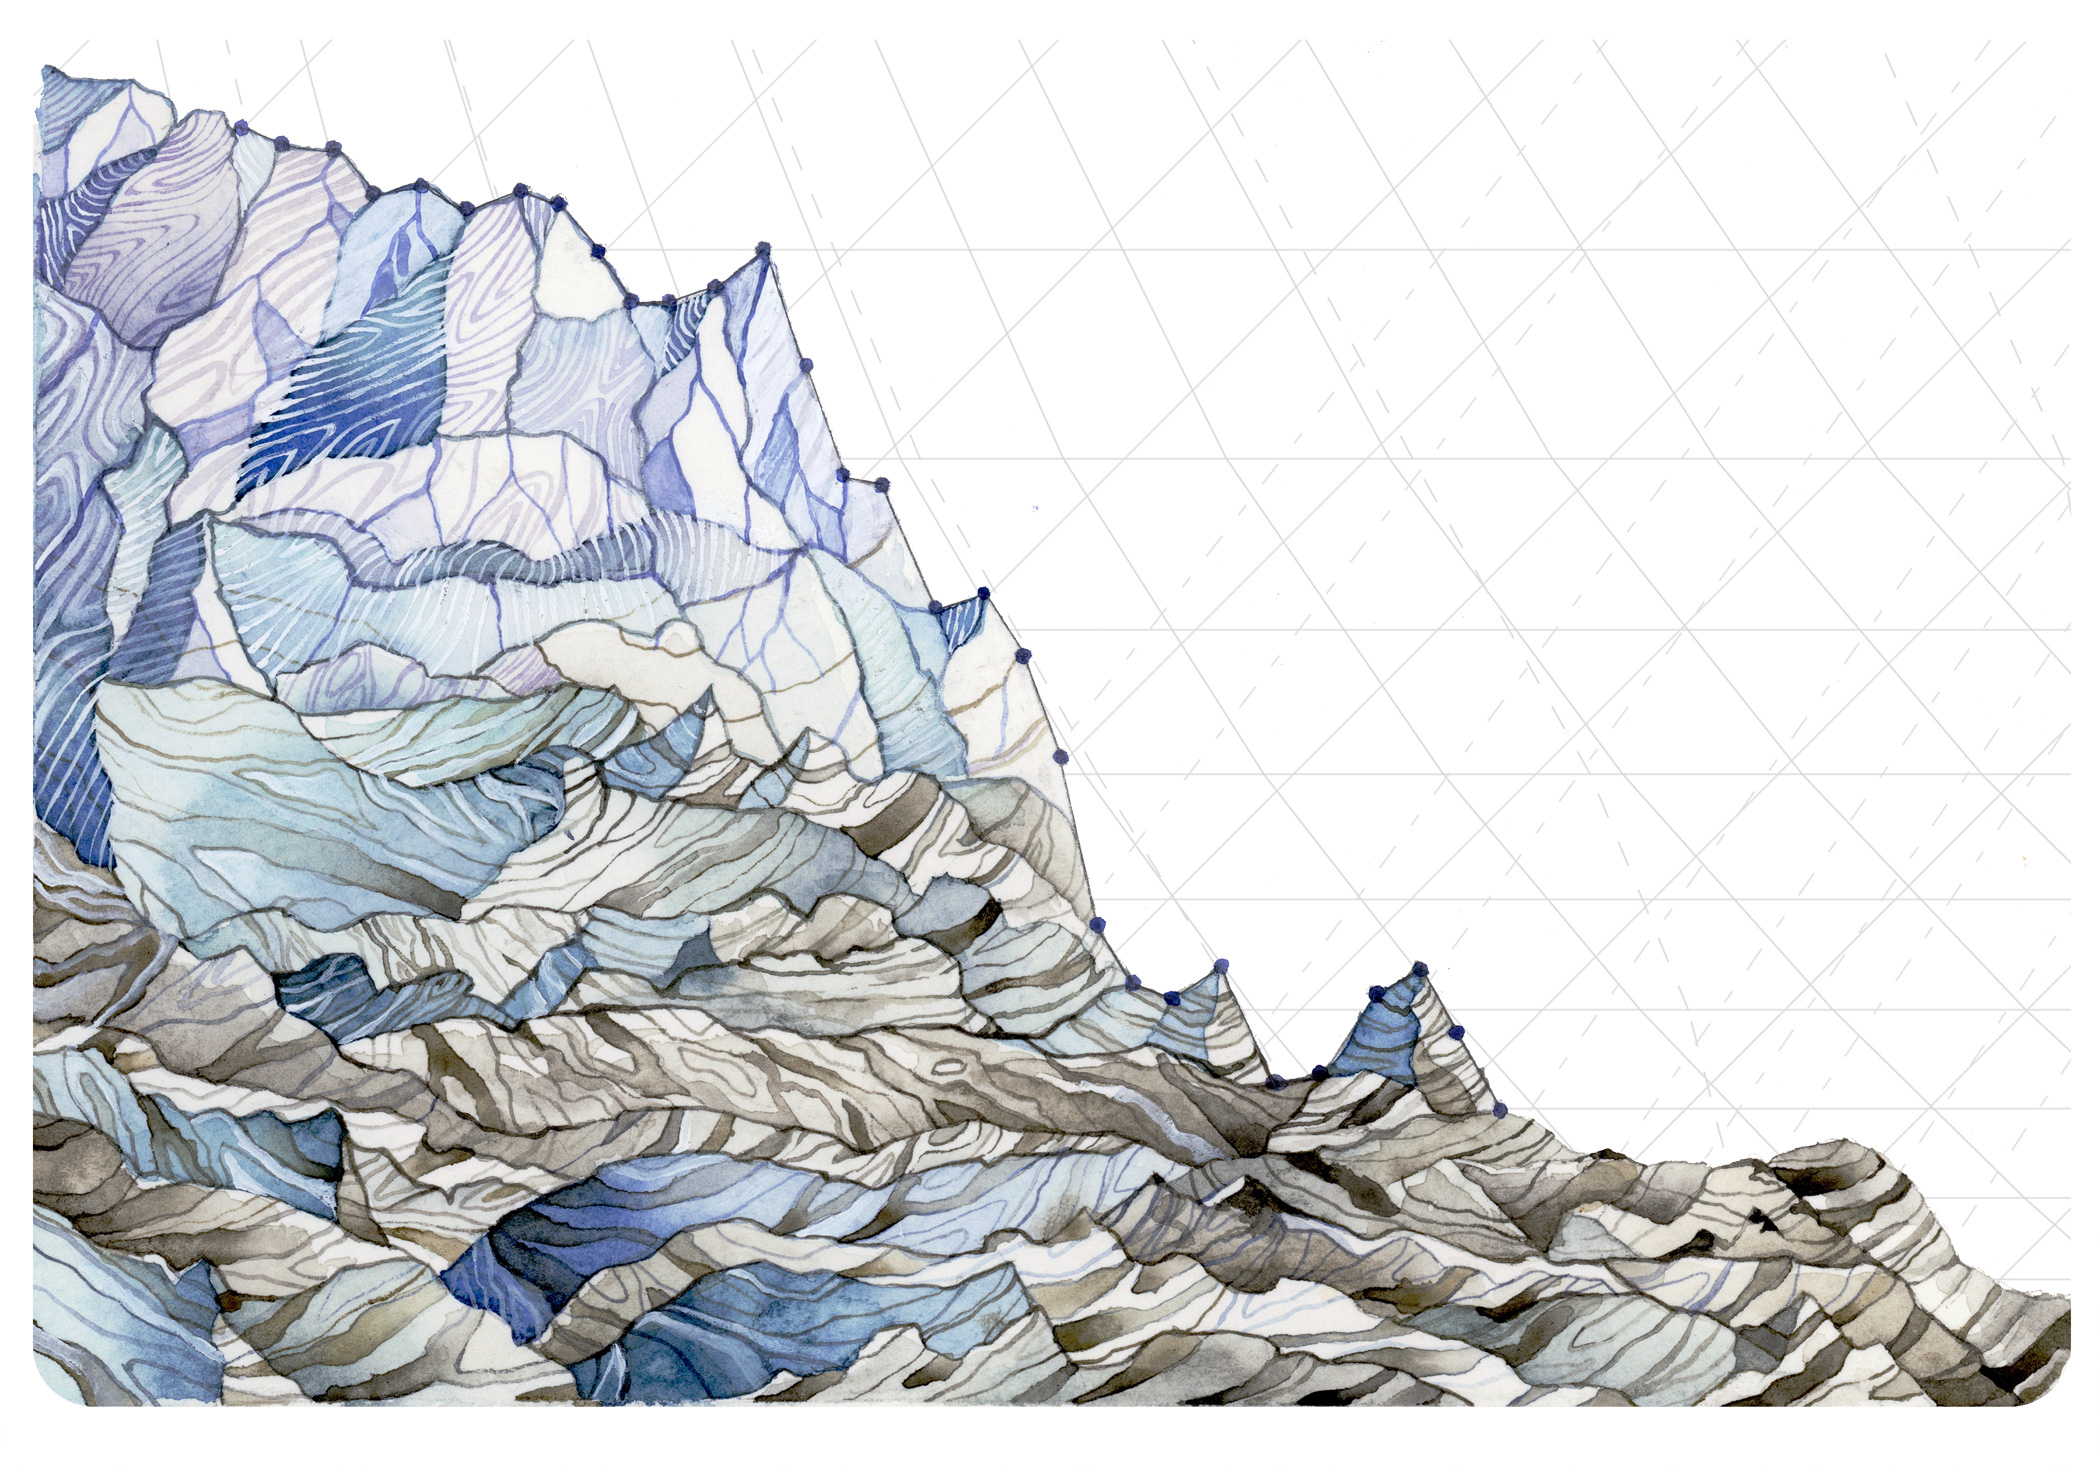 Decline in Glacier Mass Balance